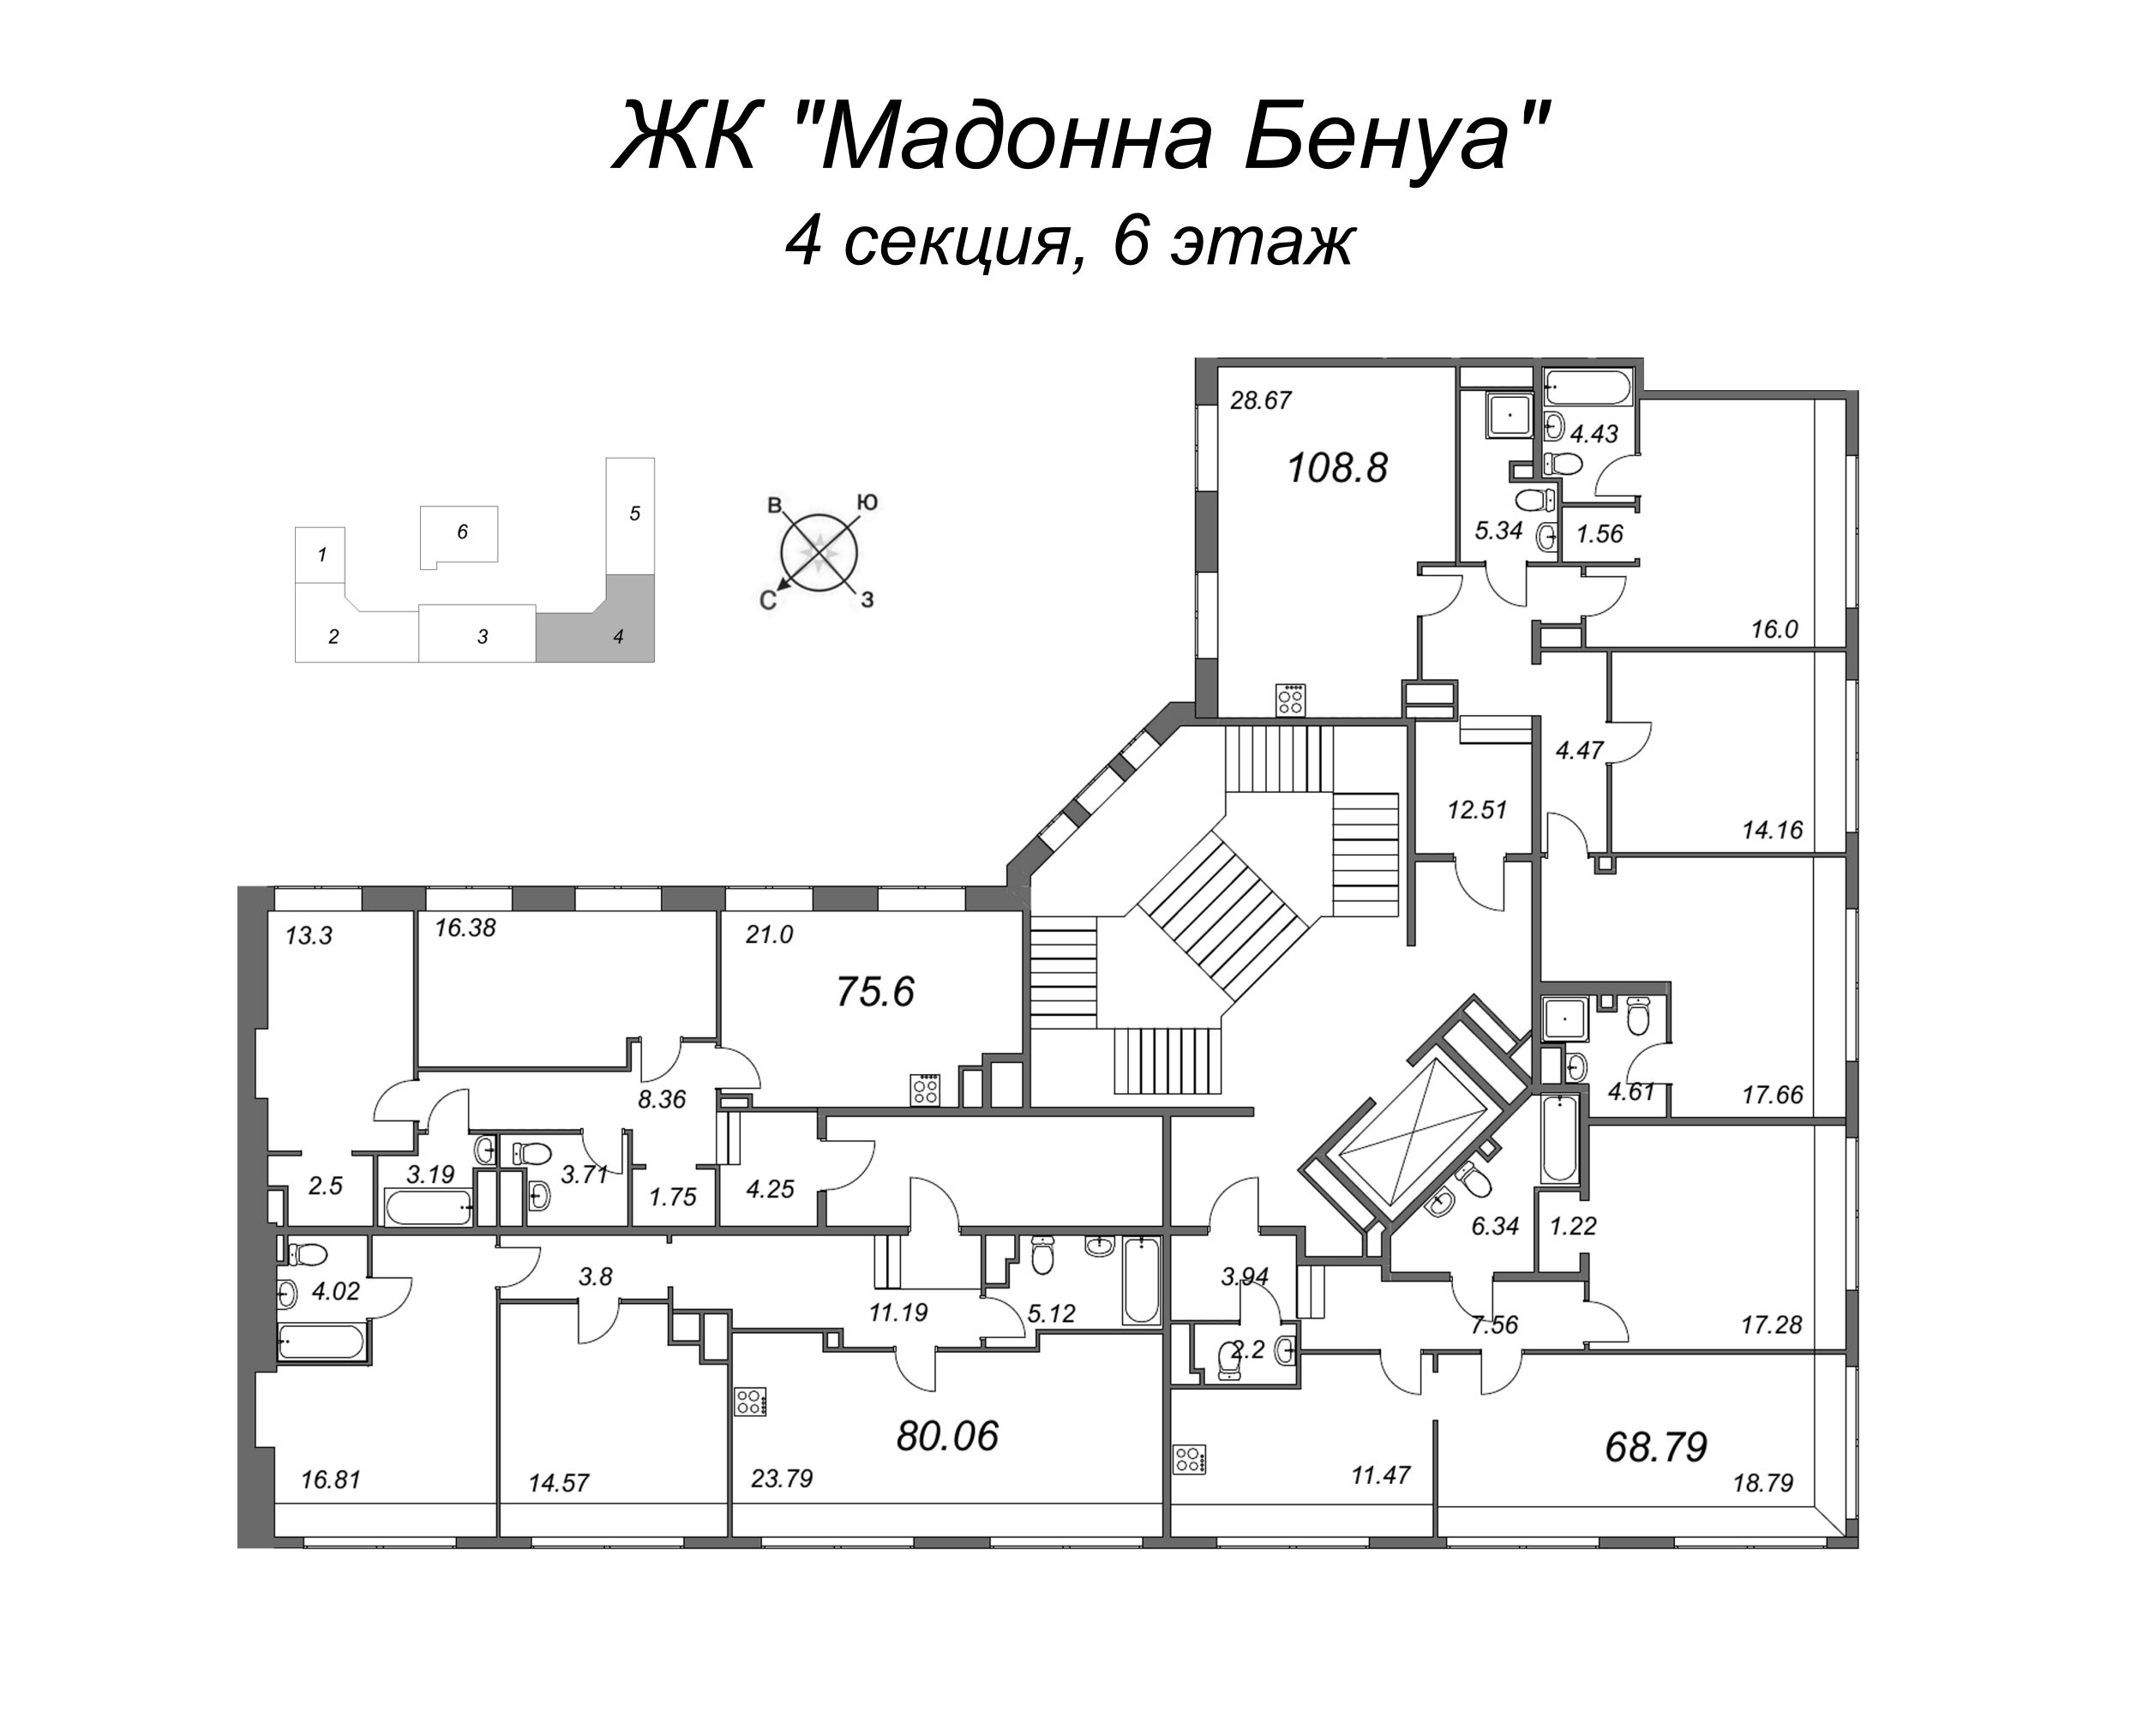 2-комнатная квартира, 78.2 м² в ЖК "Мадонна Бенуа" - планировка этажа